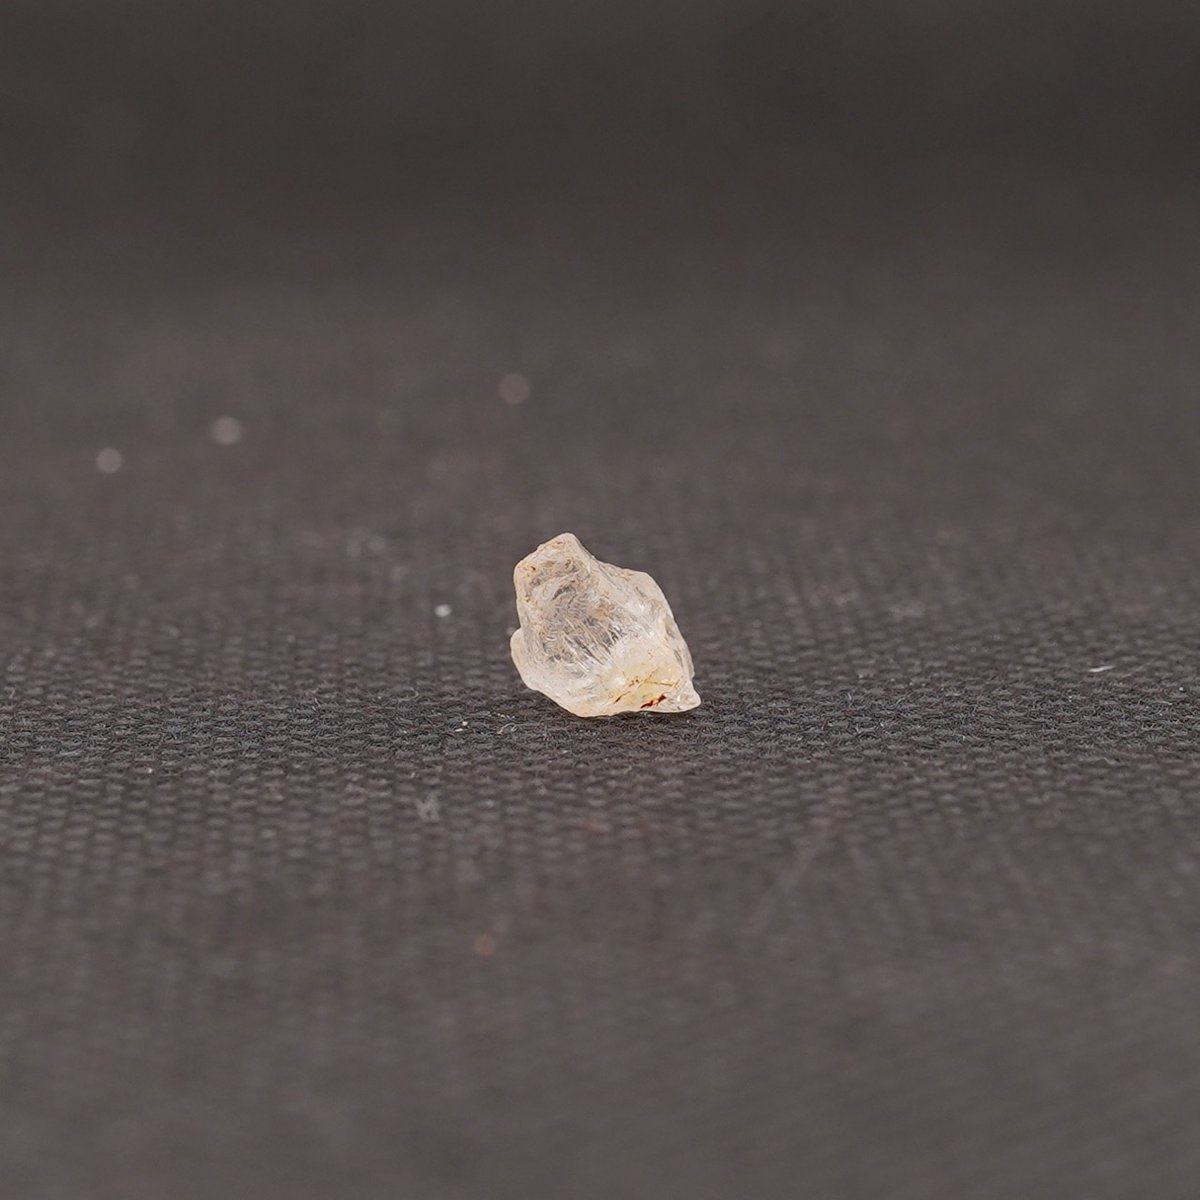 Fenacit nigerian cristal natural unicat f338